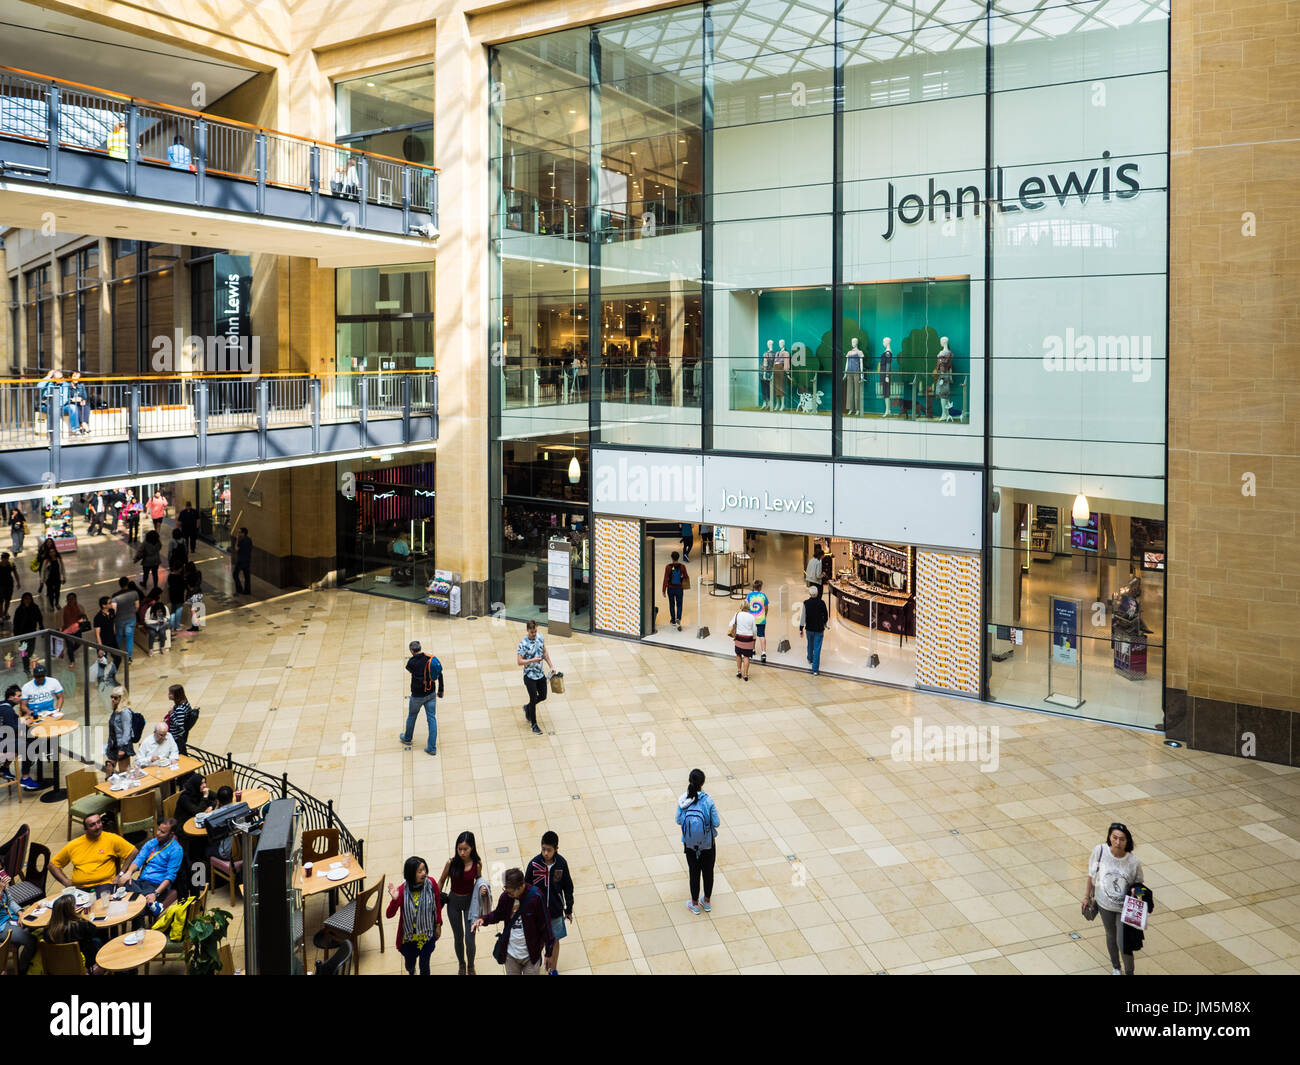 John Lewis Cambridge - entrance to the Cambridge John Lewis department store inside the Grand Arcade Shopping Centre Stock Photo